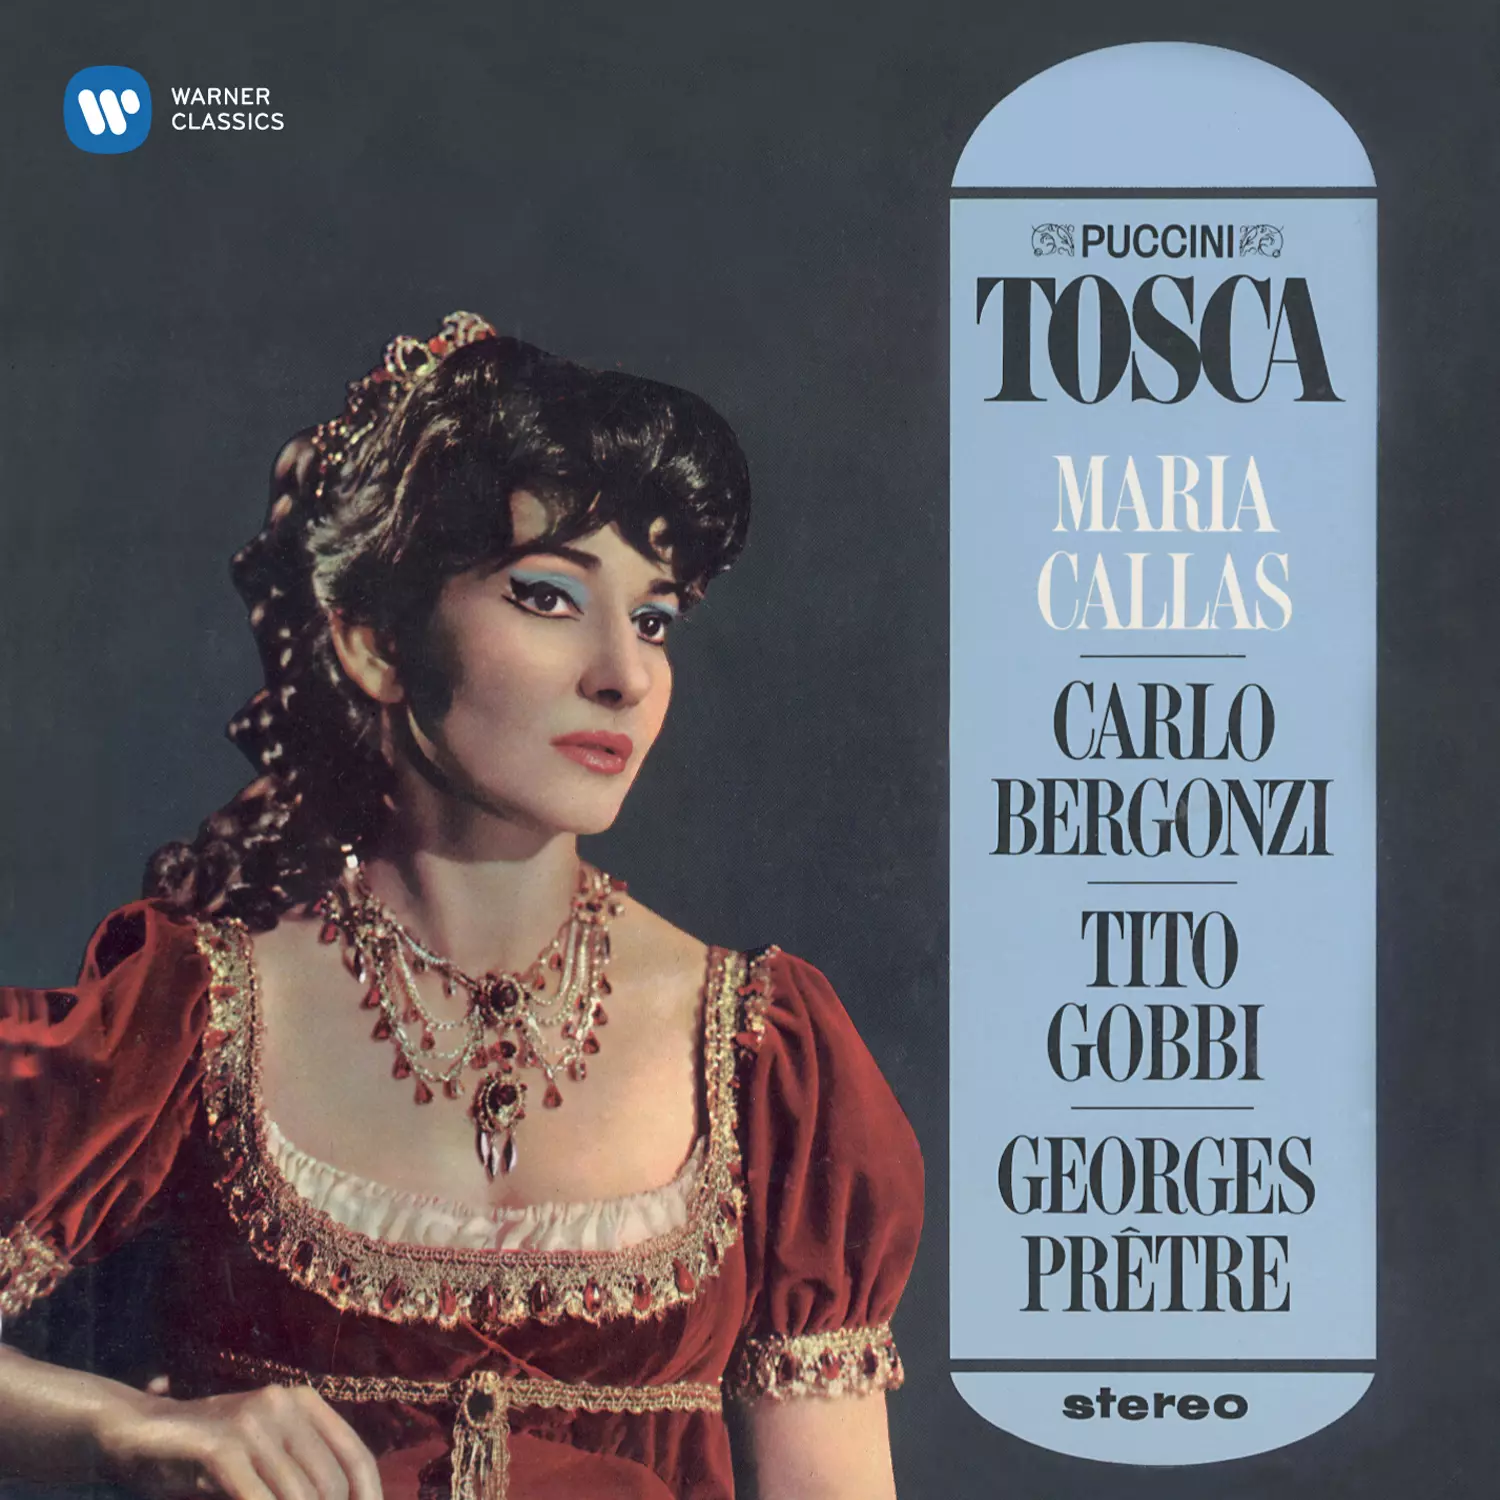 Puccini: Tosca (1965 - Prêtre) - Callas Remastered